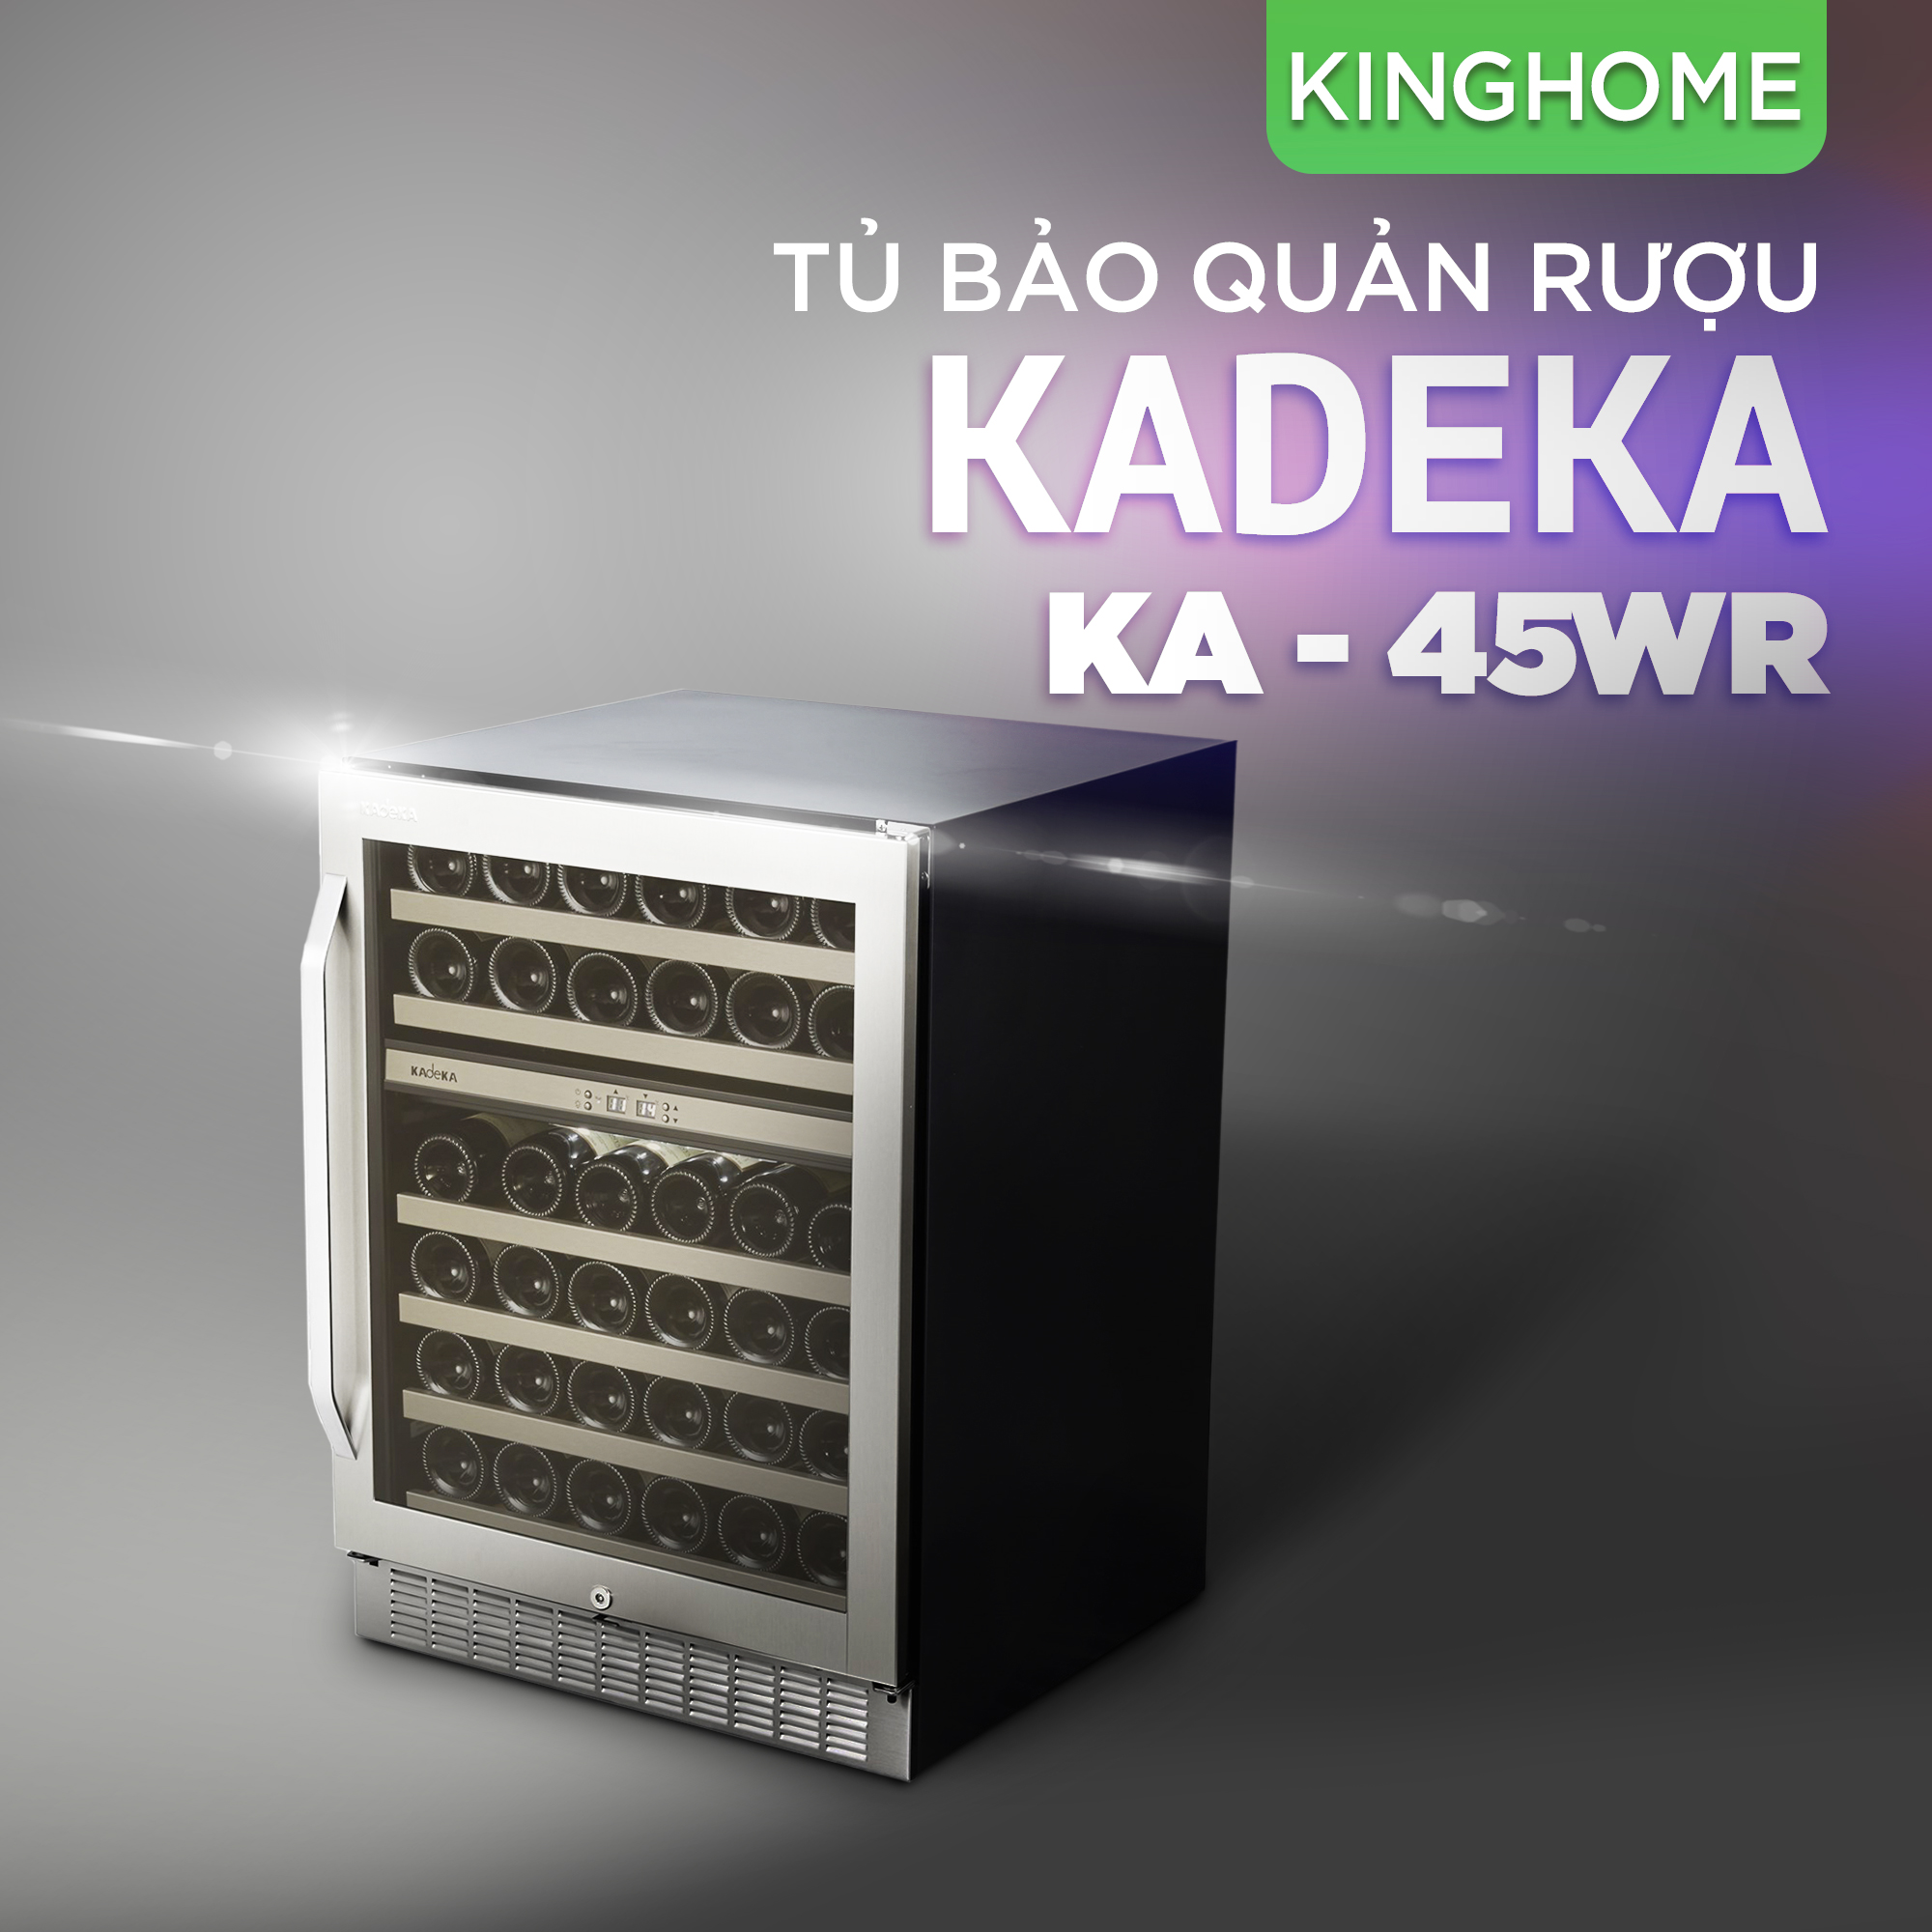 Tủ bảo quản rượu Kadeka KA-45WR